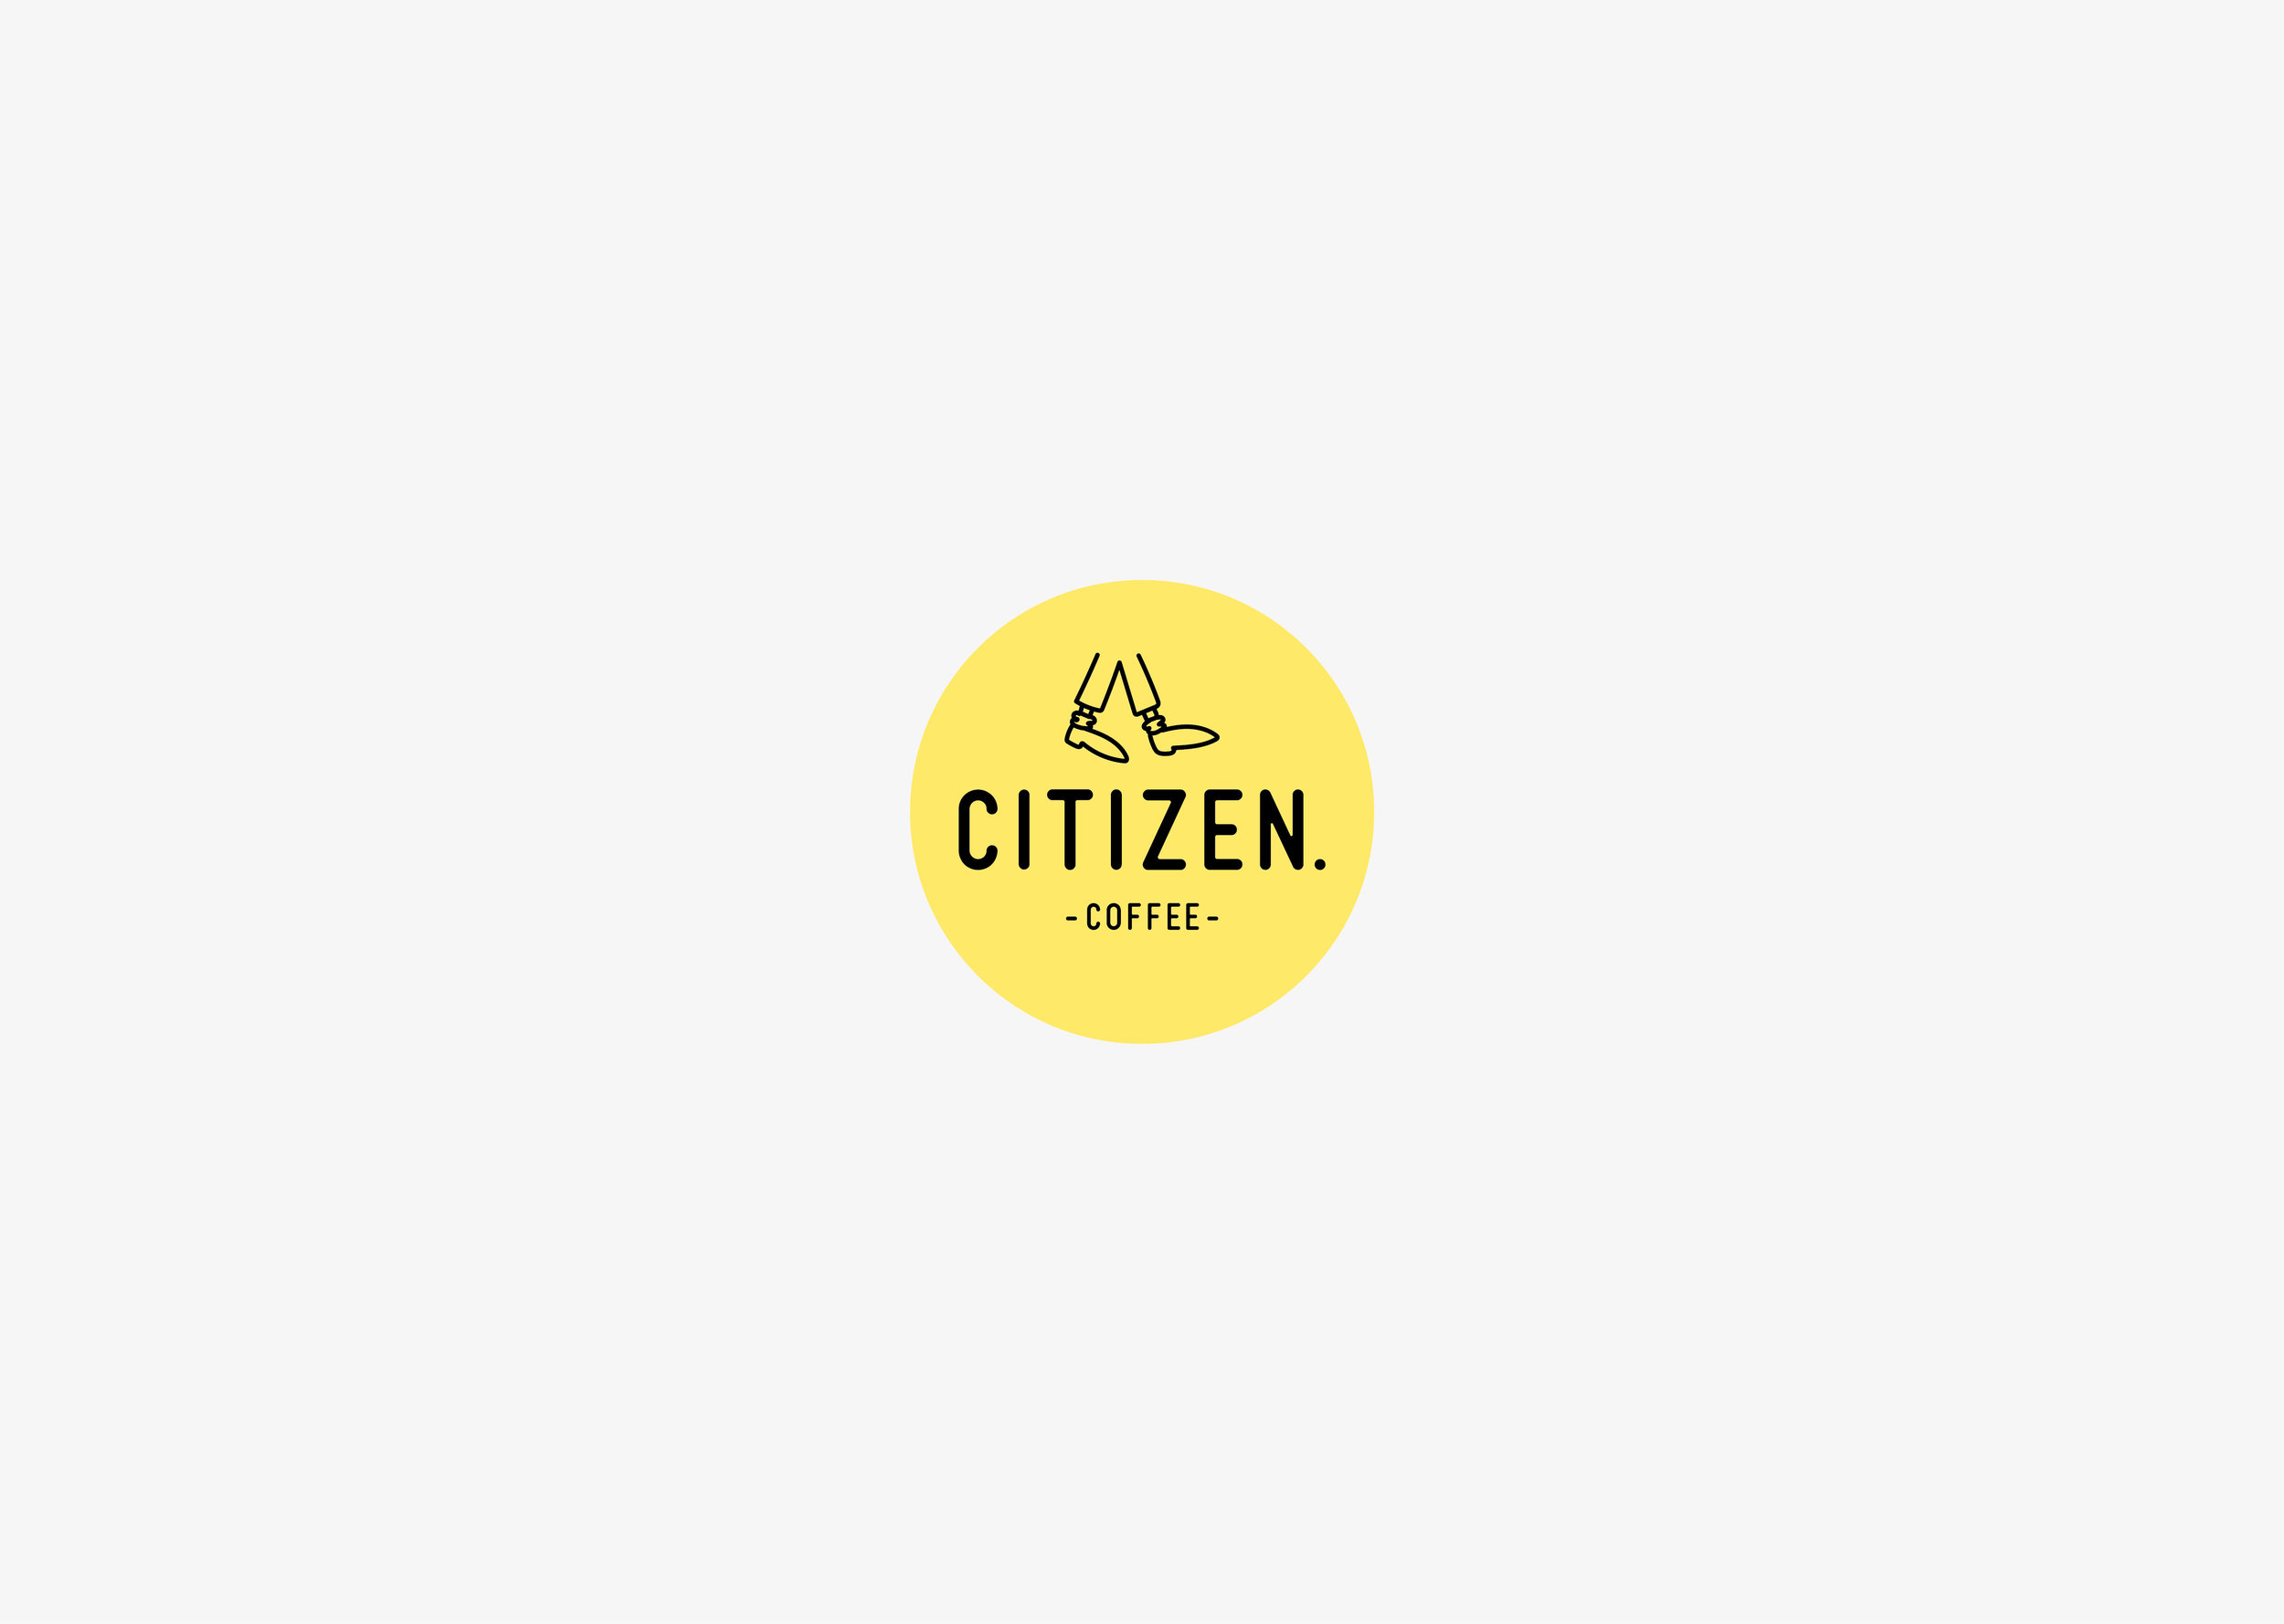 Freelance Branding Designer - Citizen Coffee yellow circle brand logo in white grey background